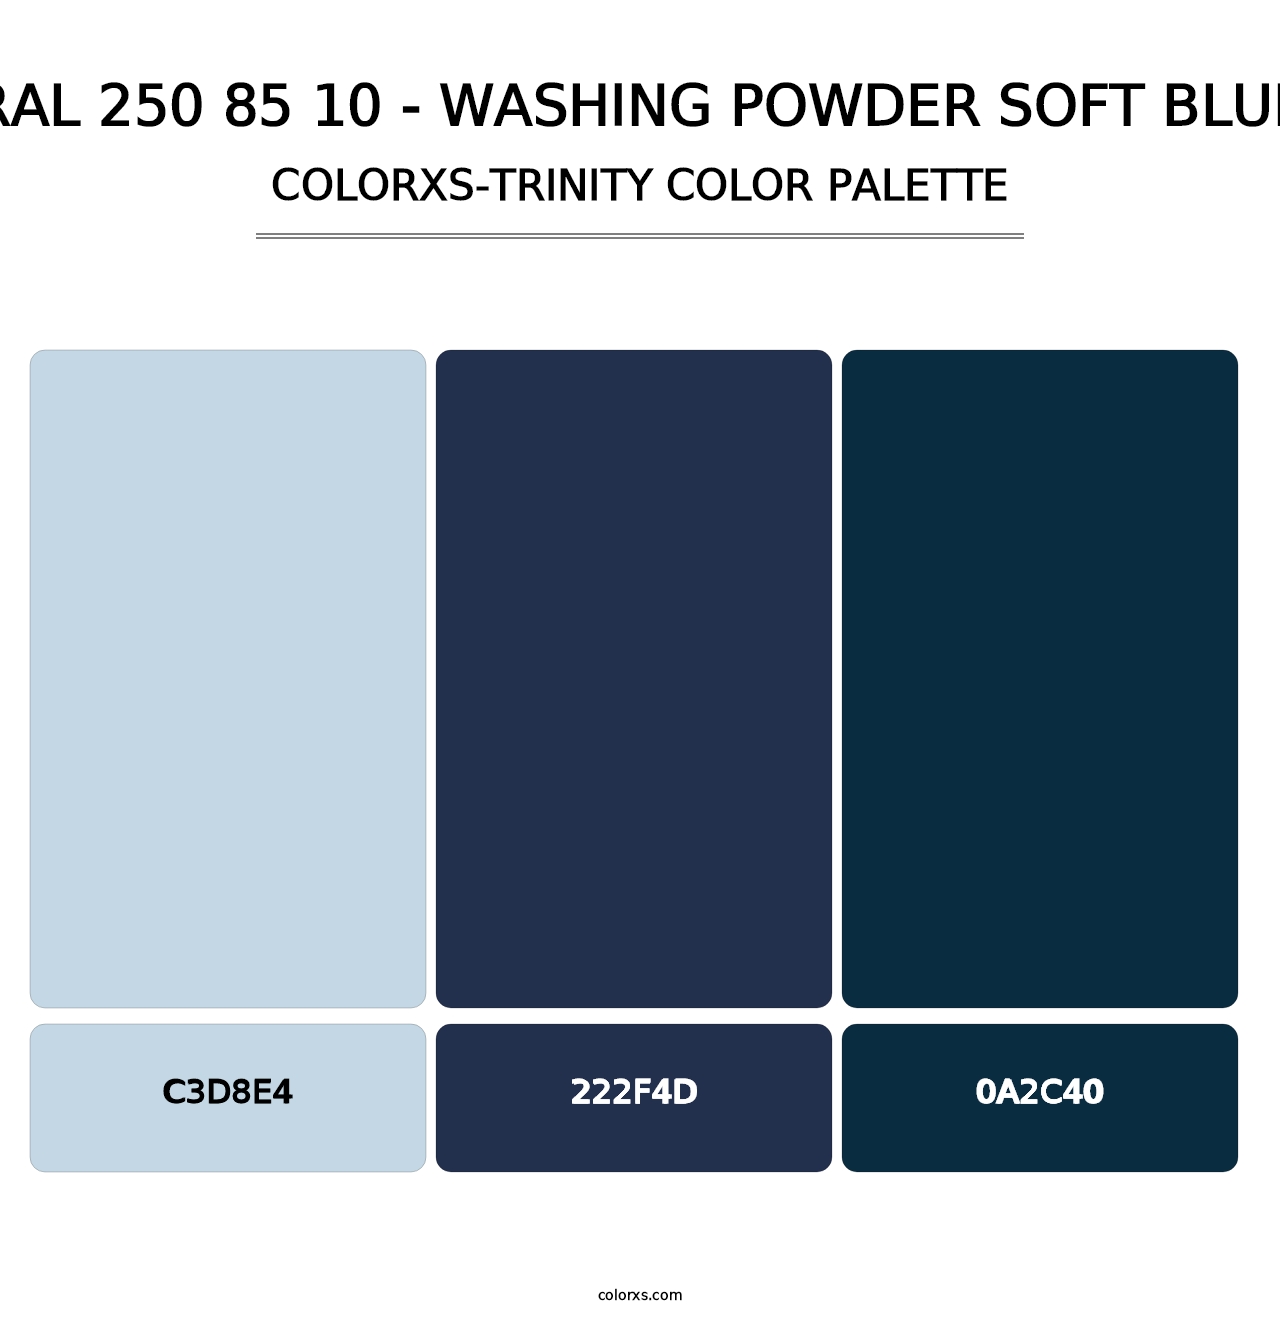 RAL 250 85 10 - Washing Powder Soft Blue - Colorxs Trinity Palette